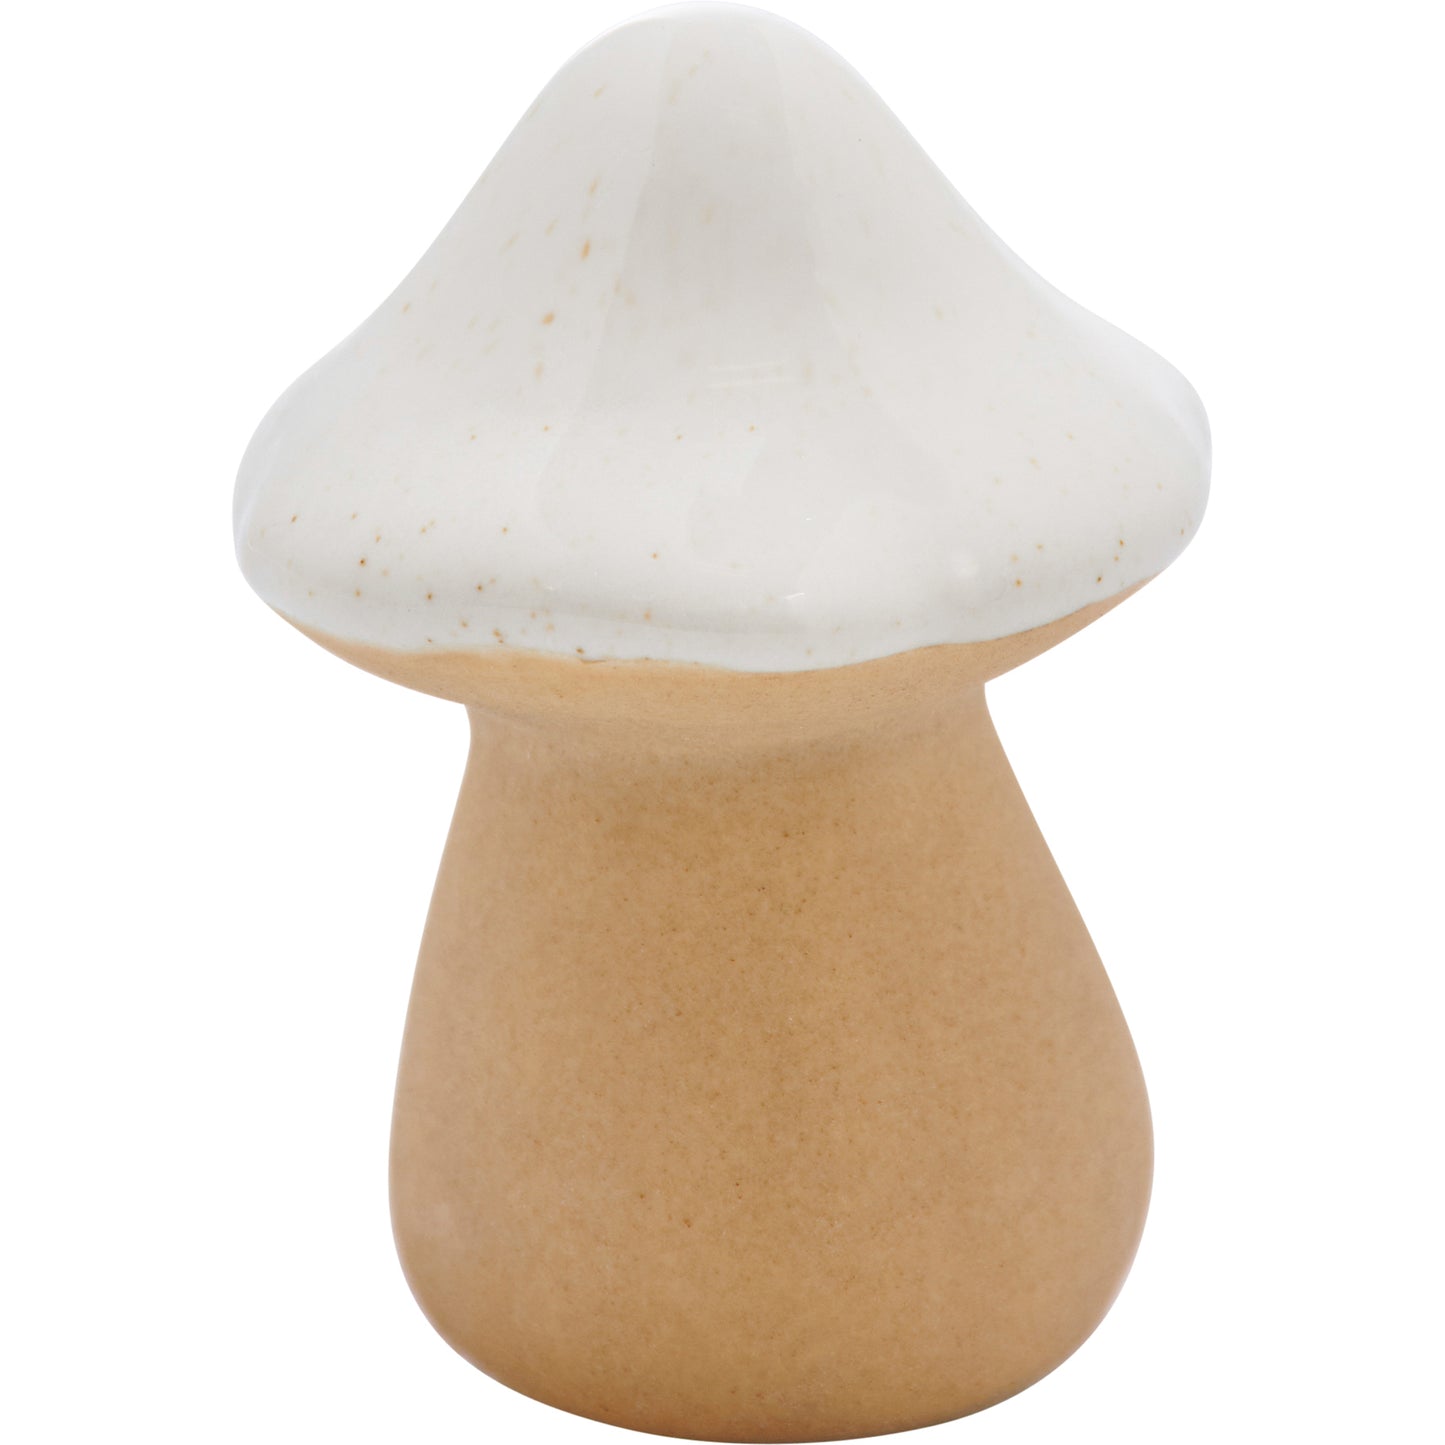 small cone mushroom figurine on a white background